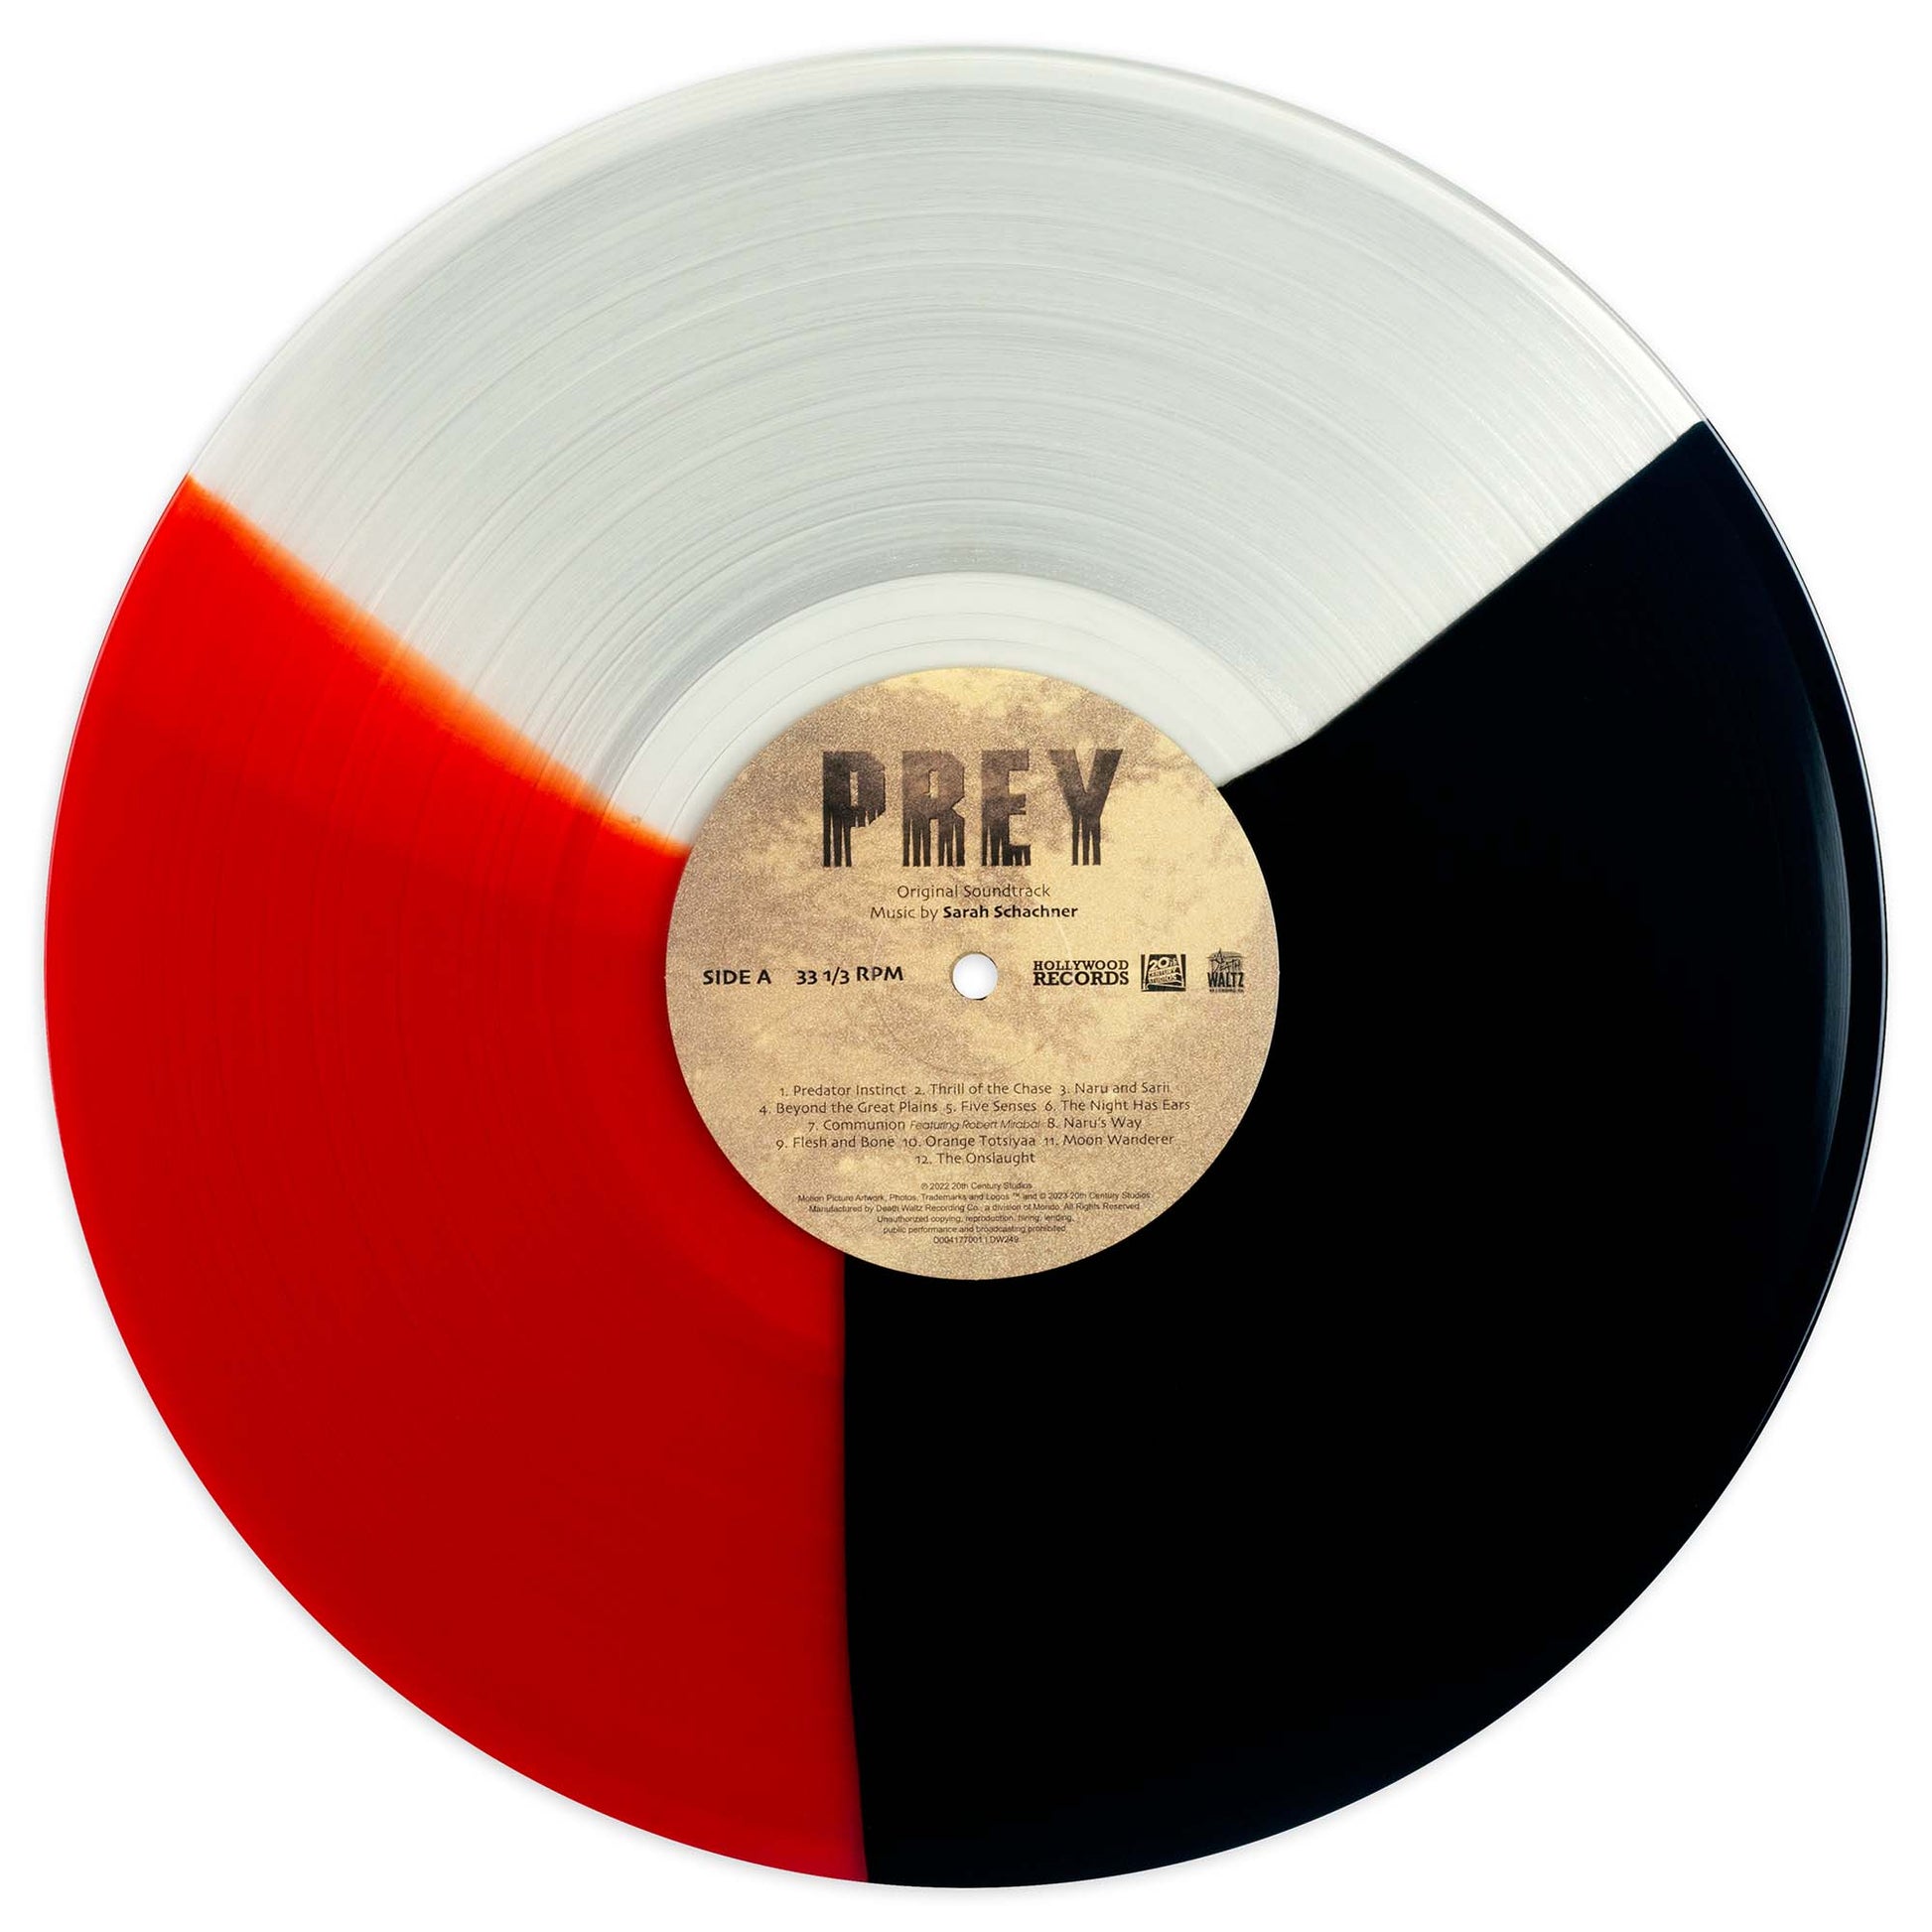 Various Artists BIRDS OF PREY: THE ALBUM Original Soundtrack Vinyl Record